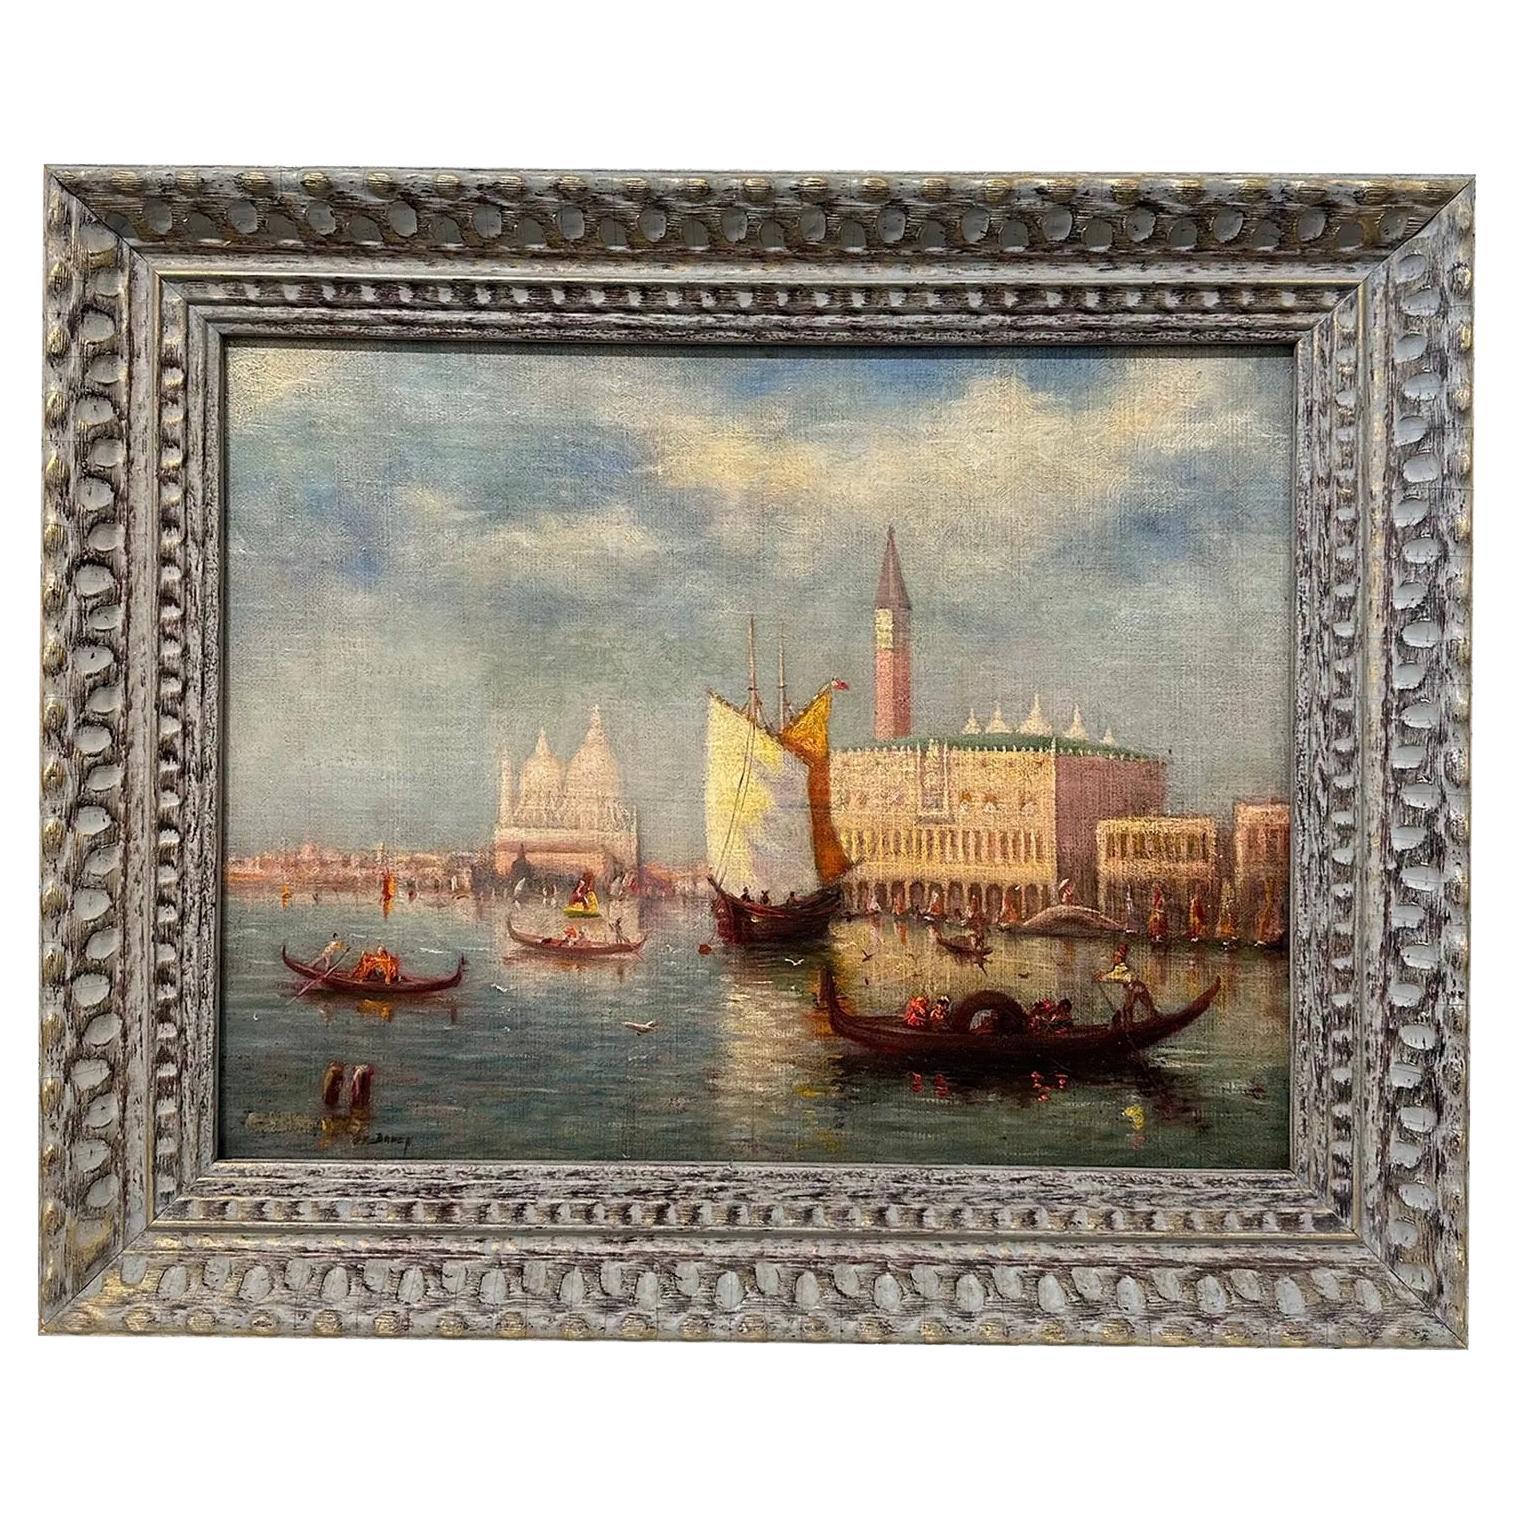 Original Oil on Canvas of Venice, Italy